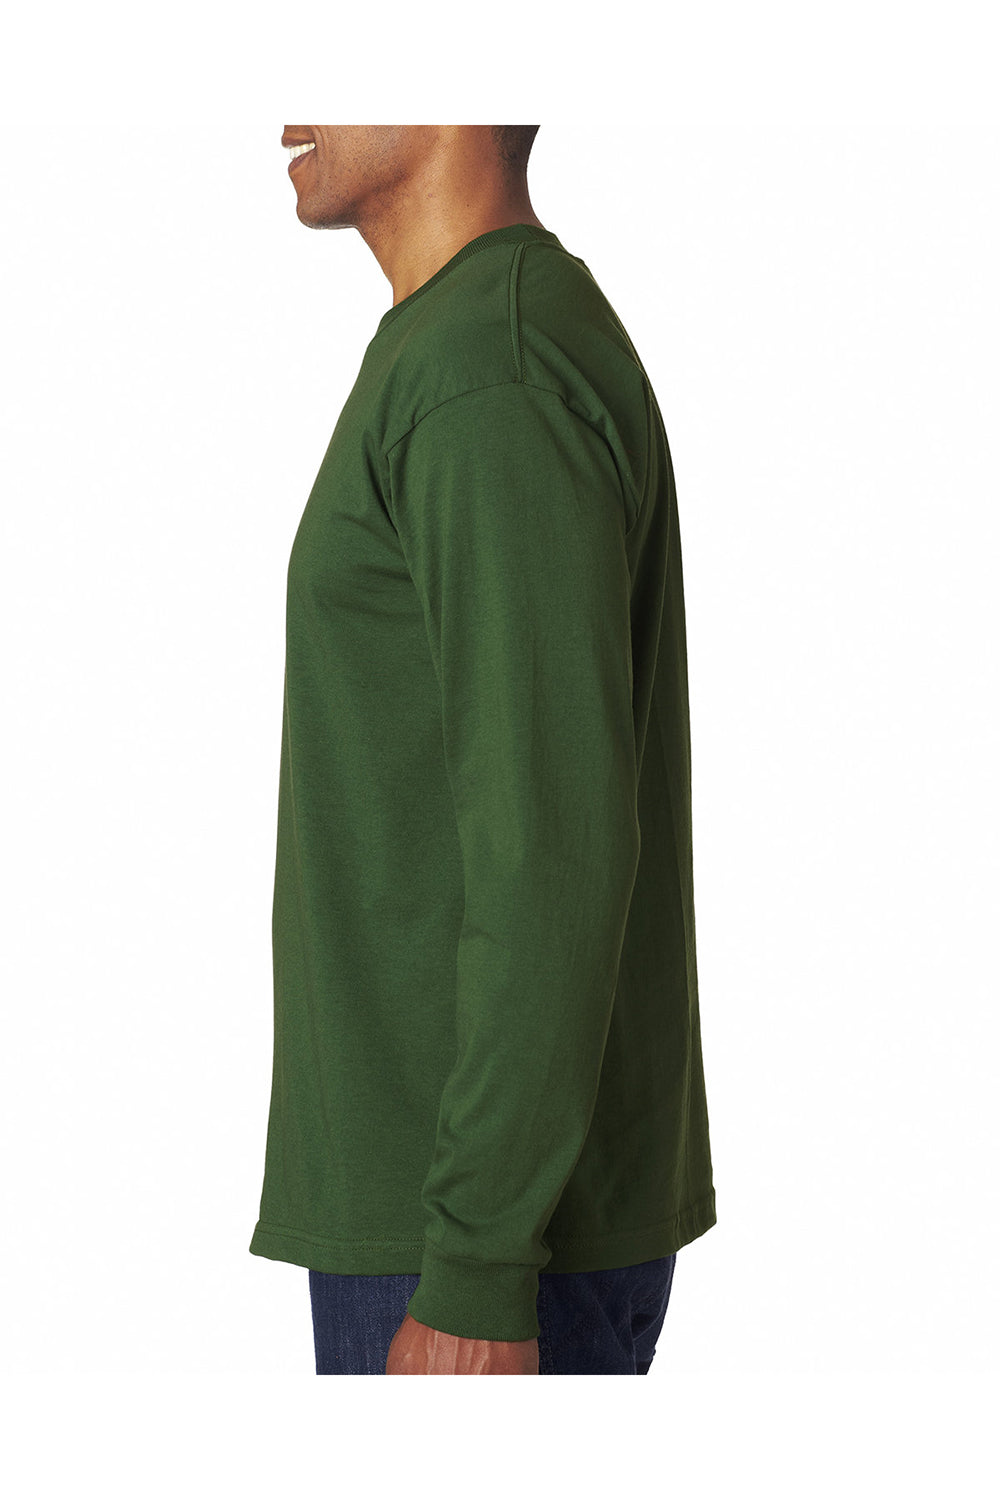 Bayside BA6100 Mens USA Made Long Sleeve Crewneck T-Shirt Forest Green Model Side